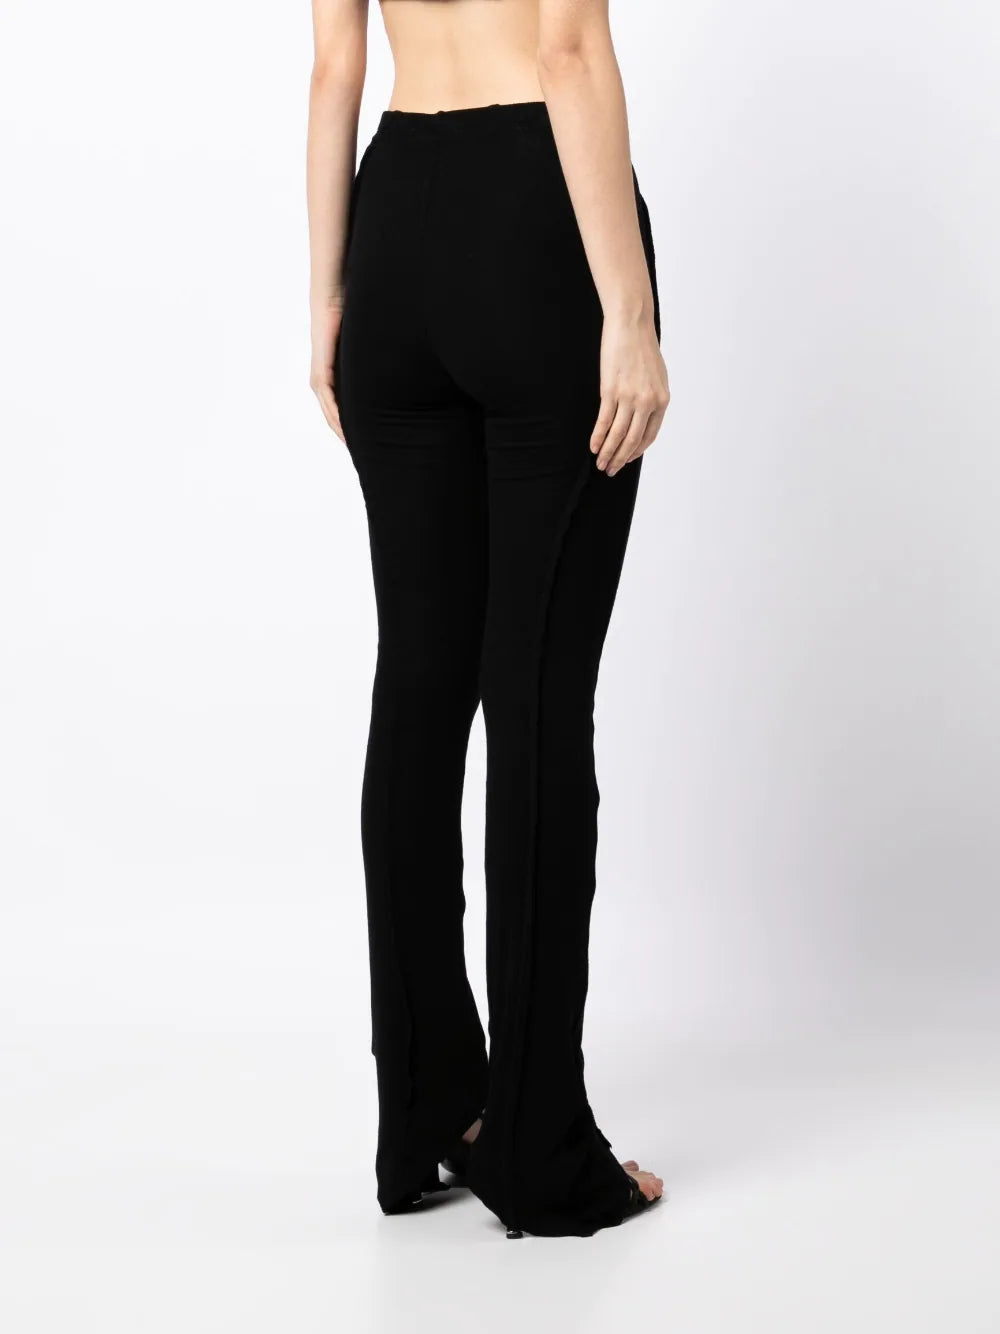 SAMI MIRO VINTAGE Asymmetric Pants Black - MAISONDEFASHION.COM